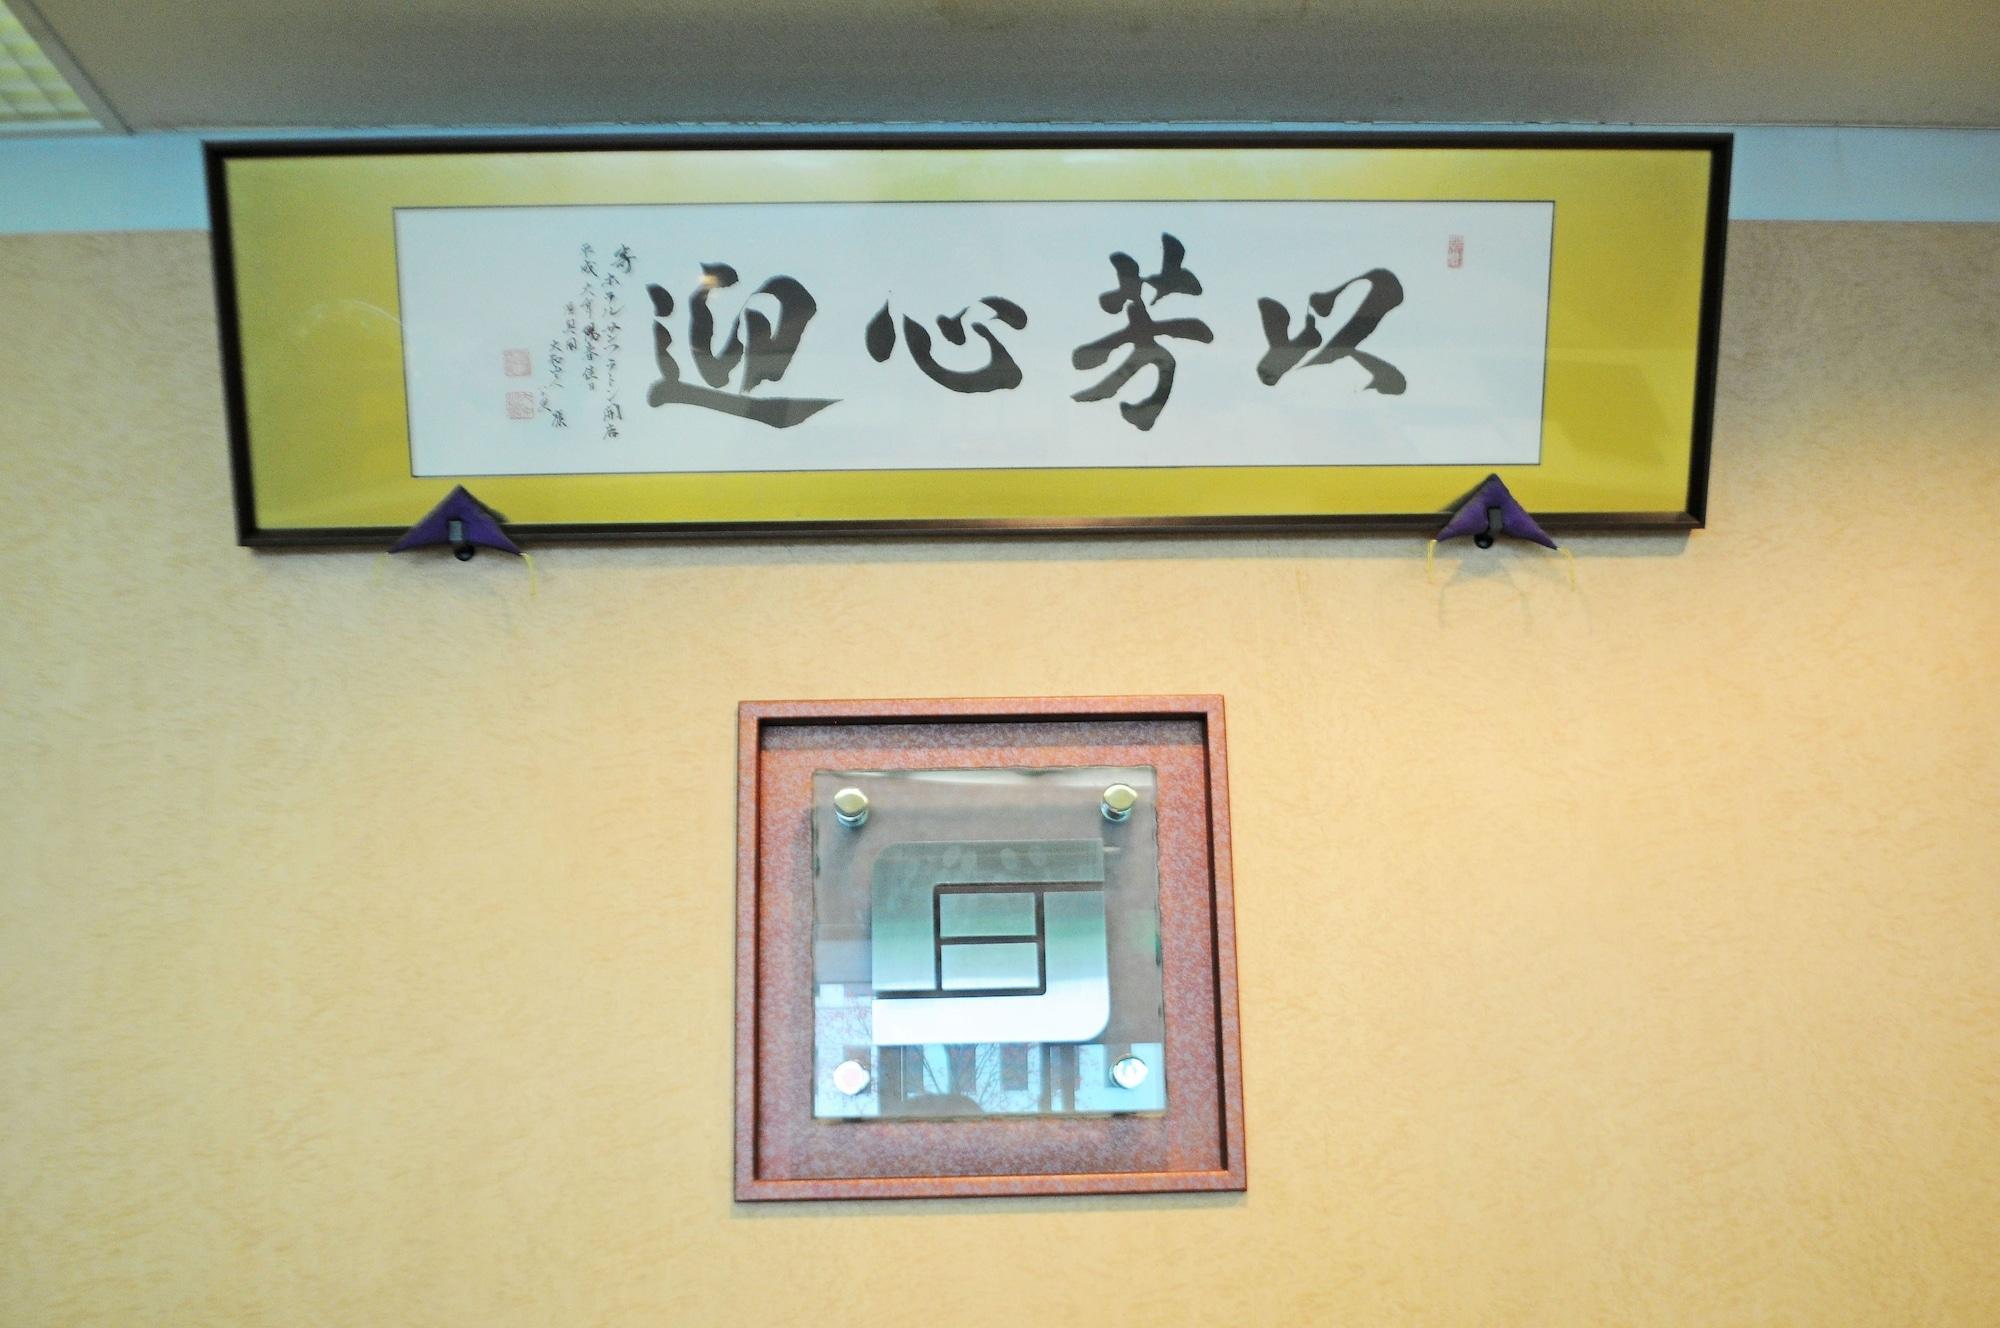 Hotel Sunfuraton Furano Ngoại thất bức ảnh